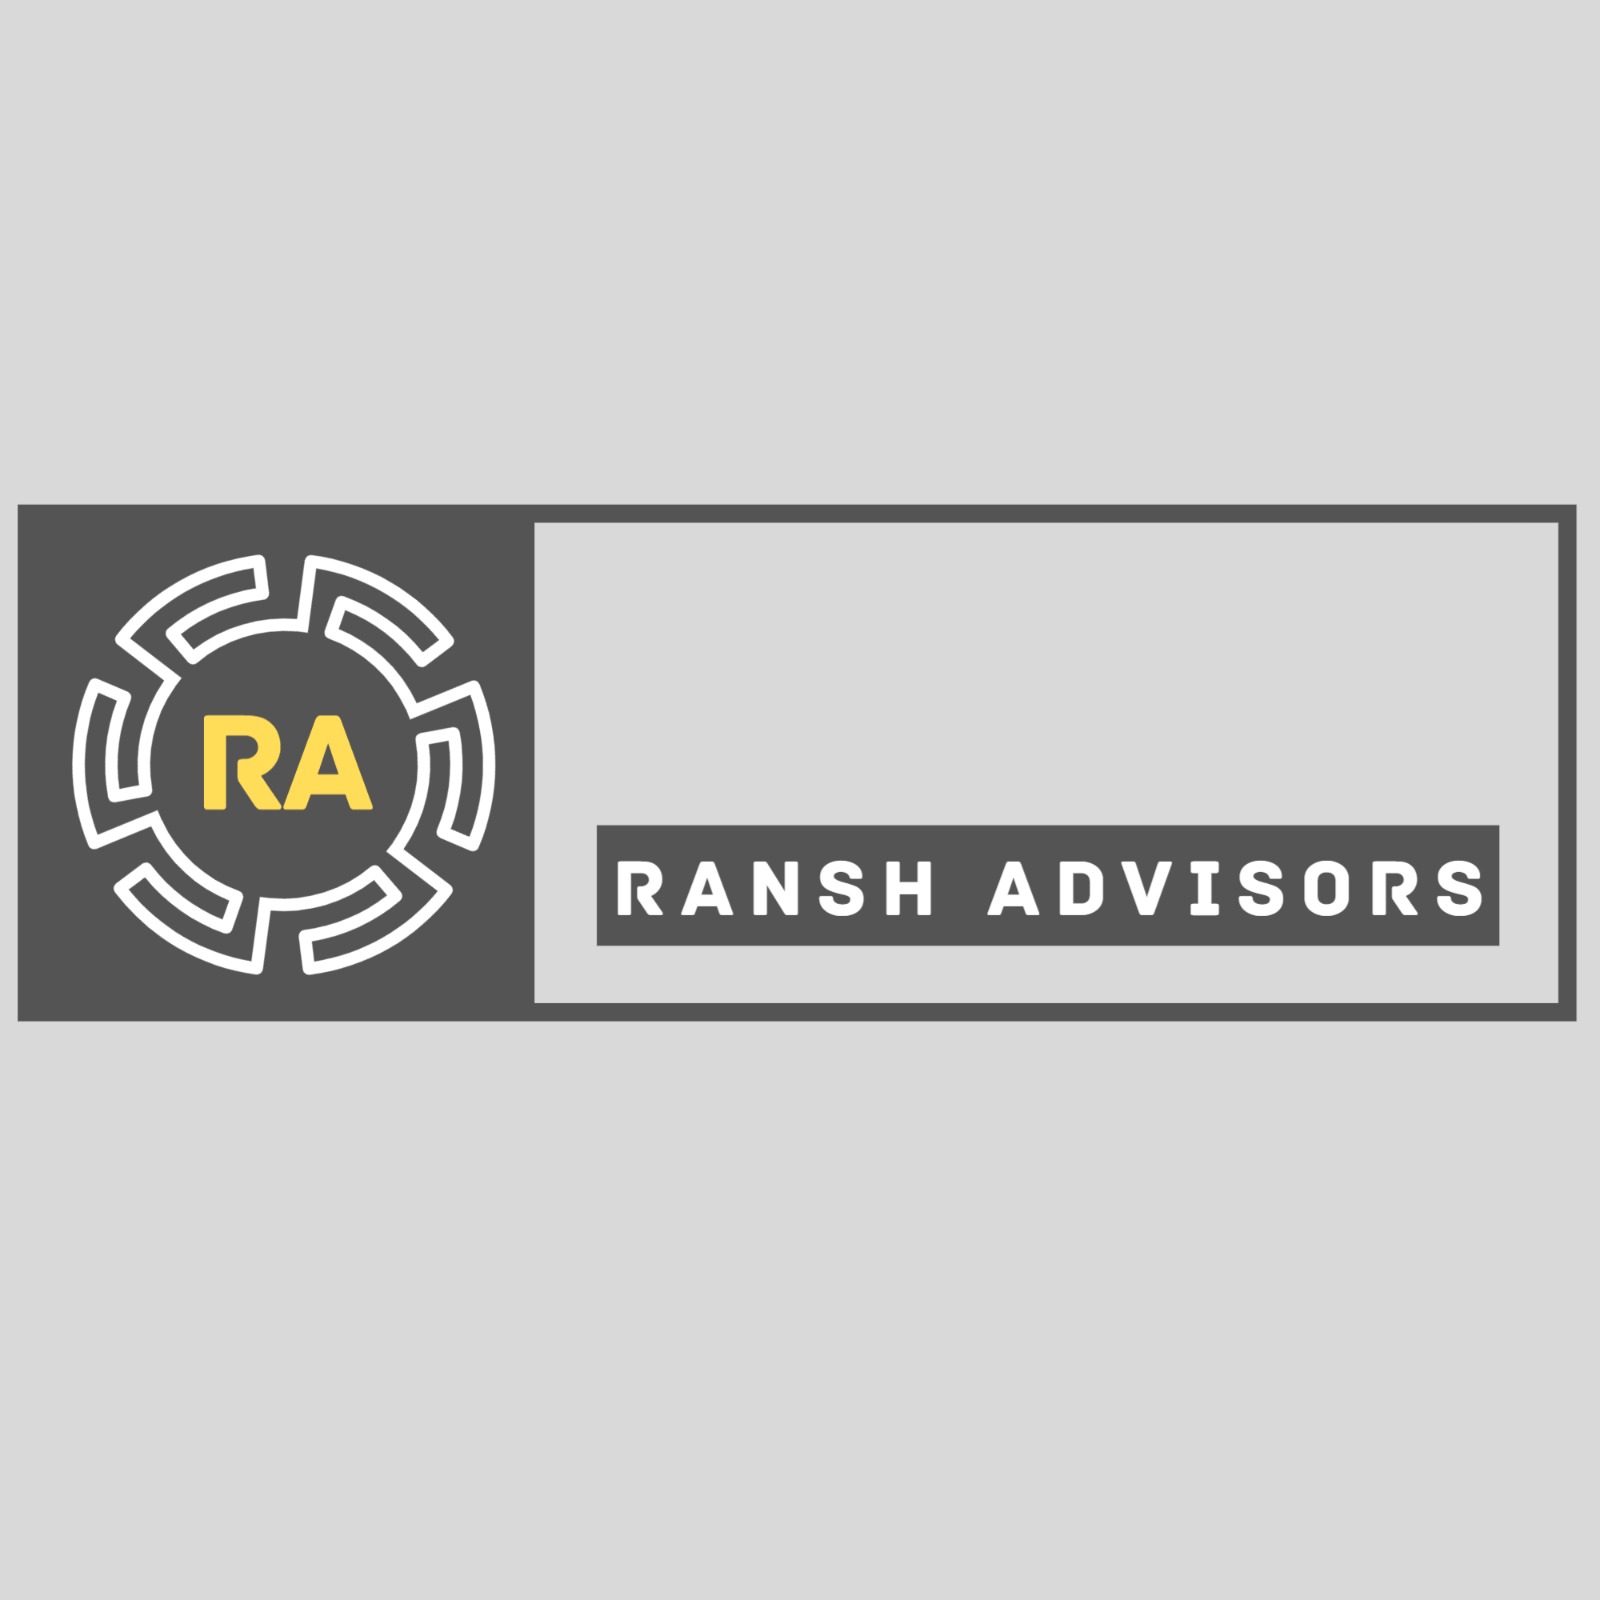 Ransh Advisors